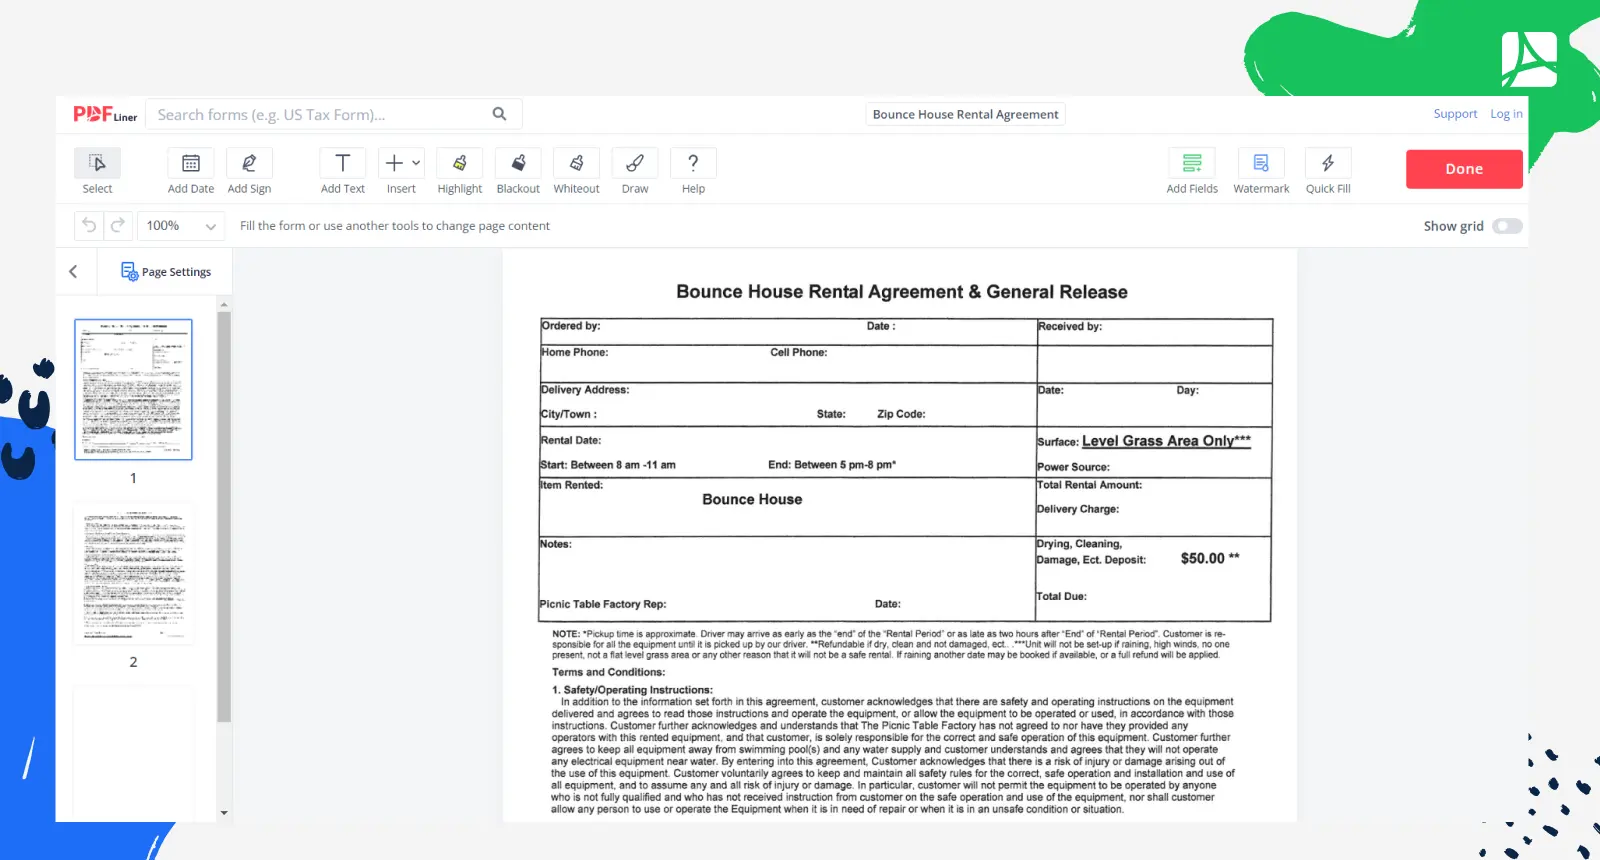 Bounce House Rental Agreement Form Screenshot